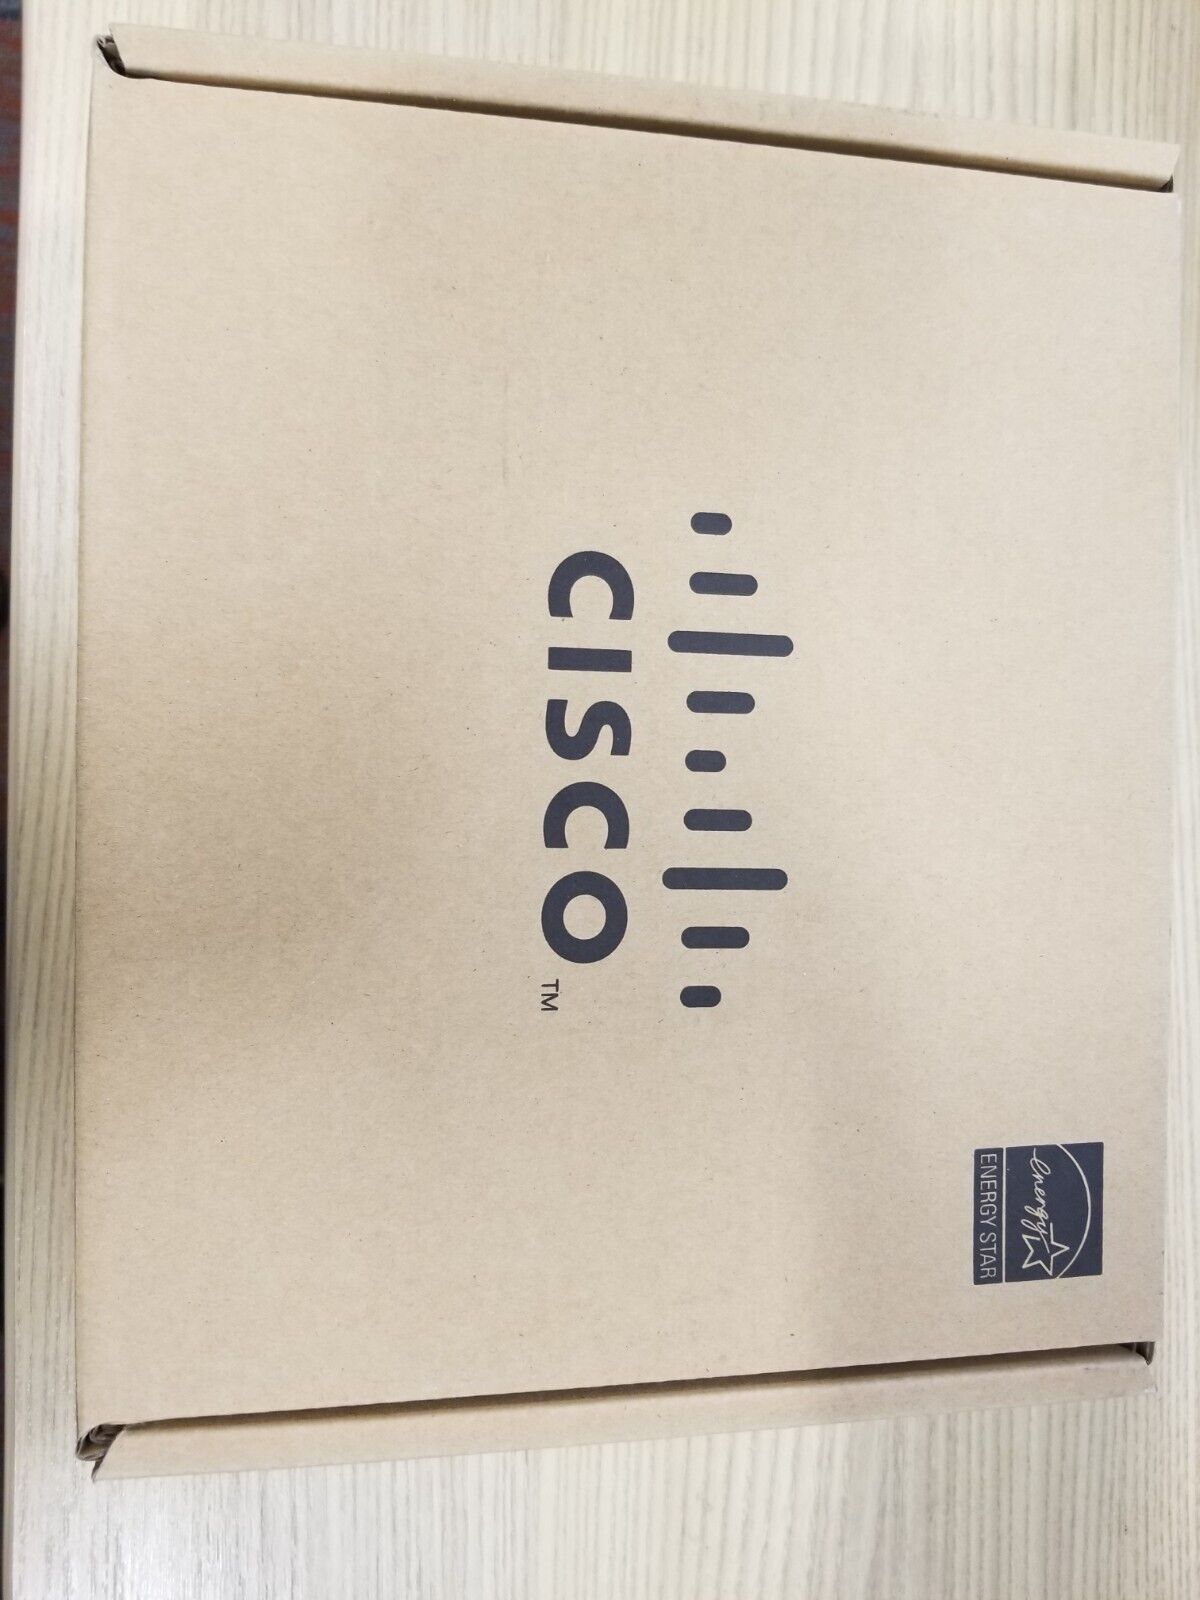 Cisco CP-7841-K9 VOiP Phone, Open Box